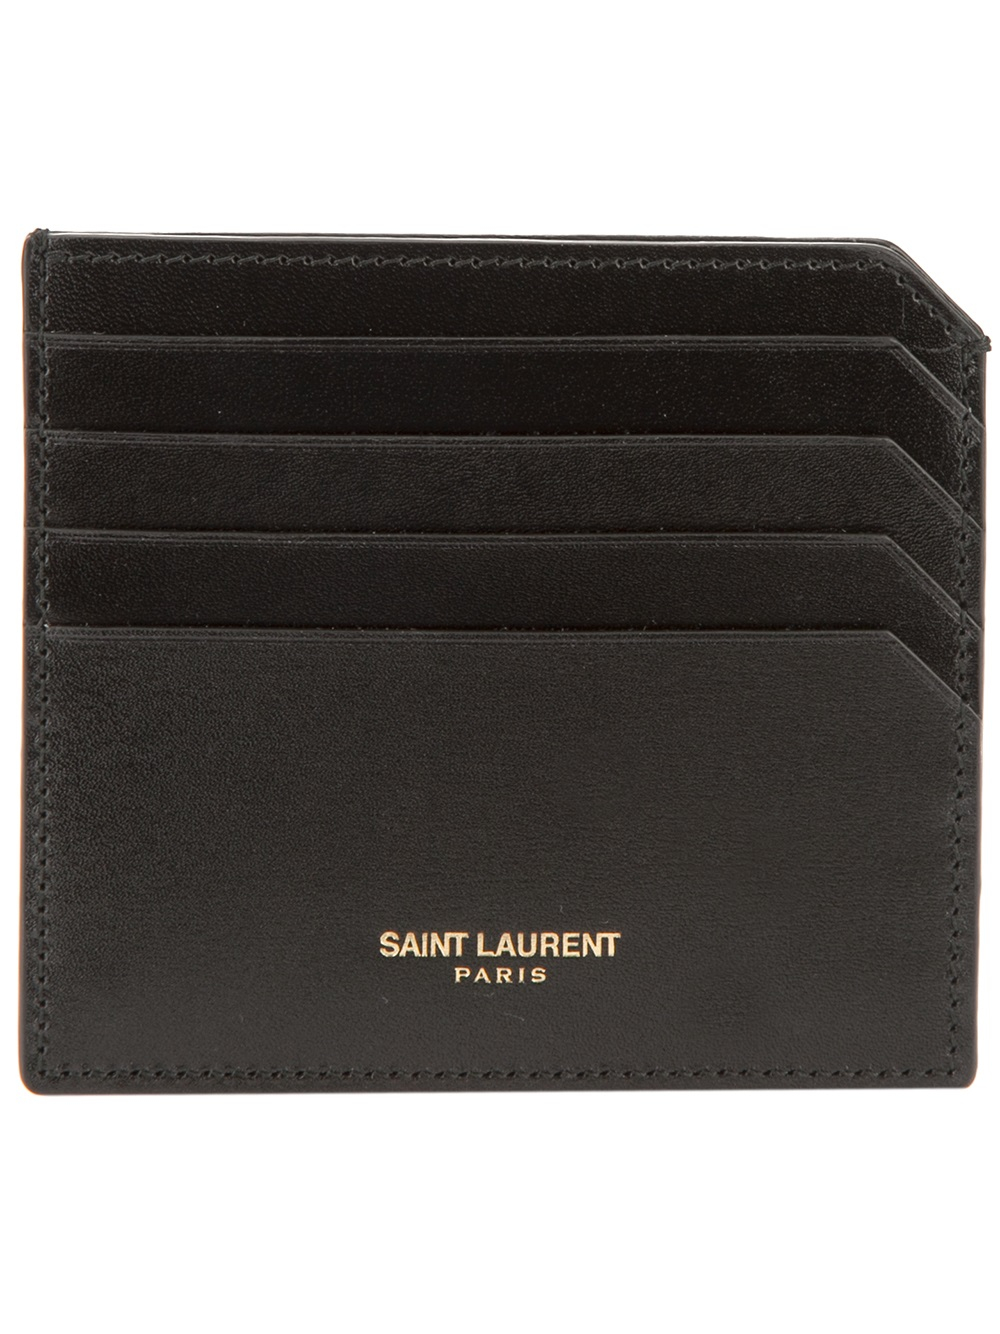 Lyst - Saint Laurent Classic Card Holder in Black for Men